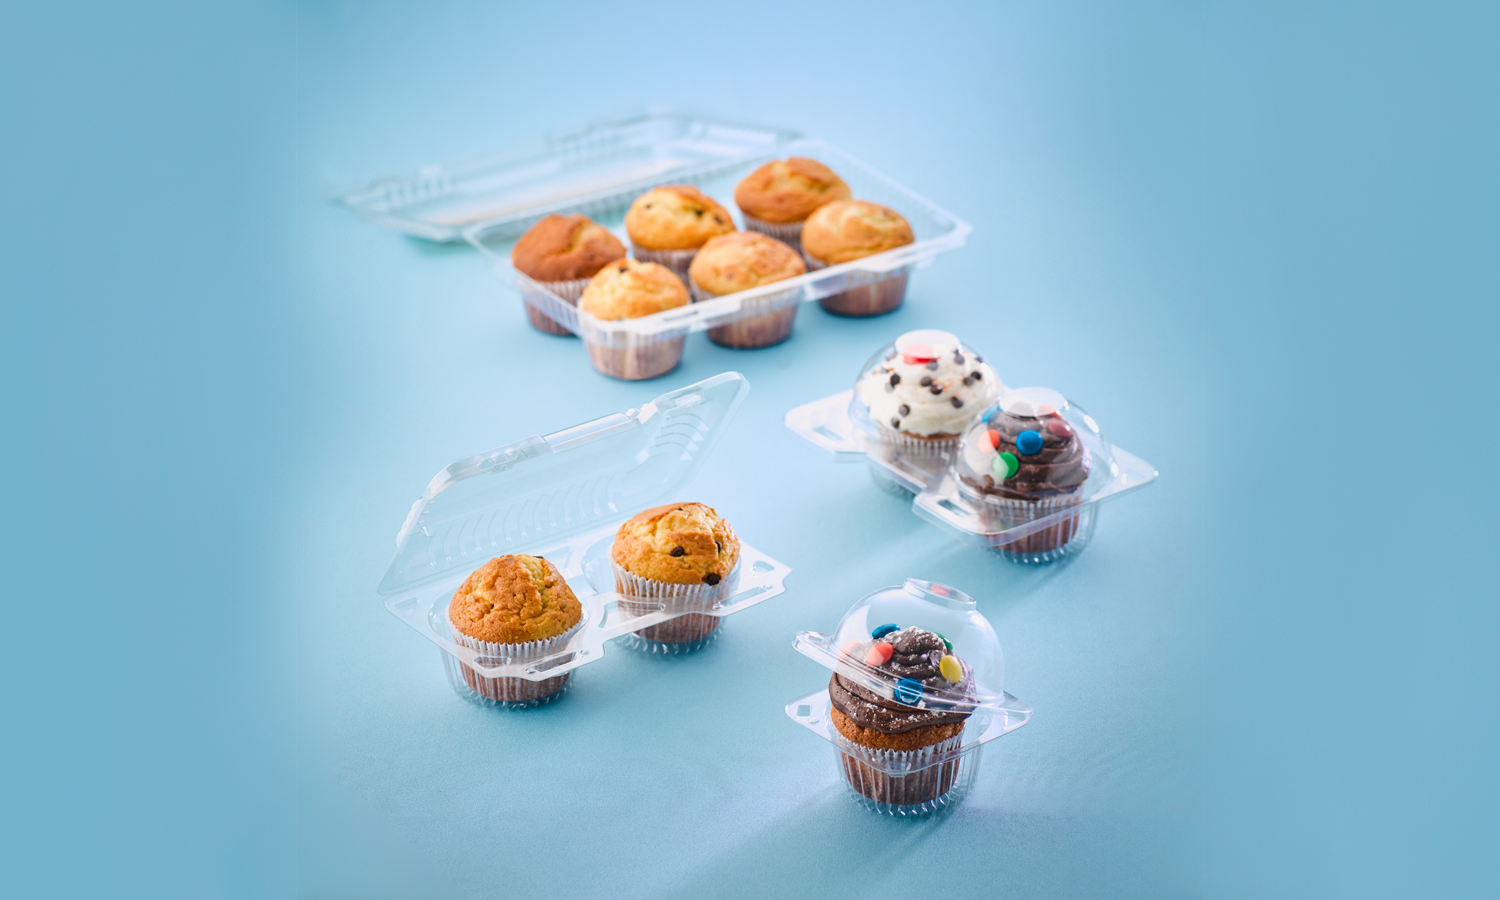 resq-reg-visualpack-cupcake-&-muffin-containers